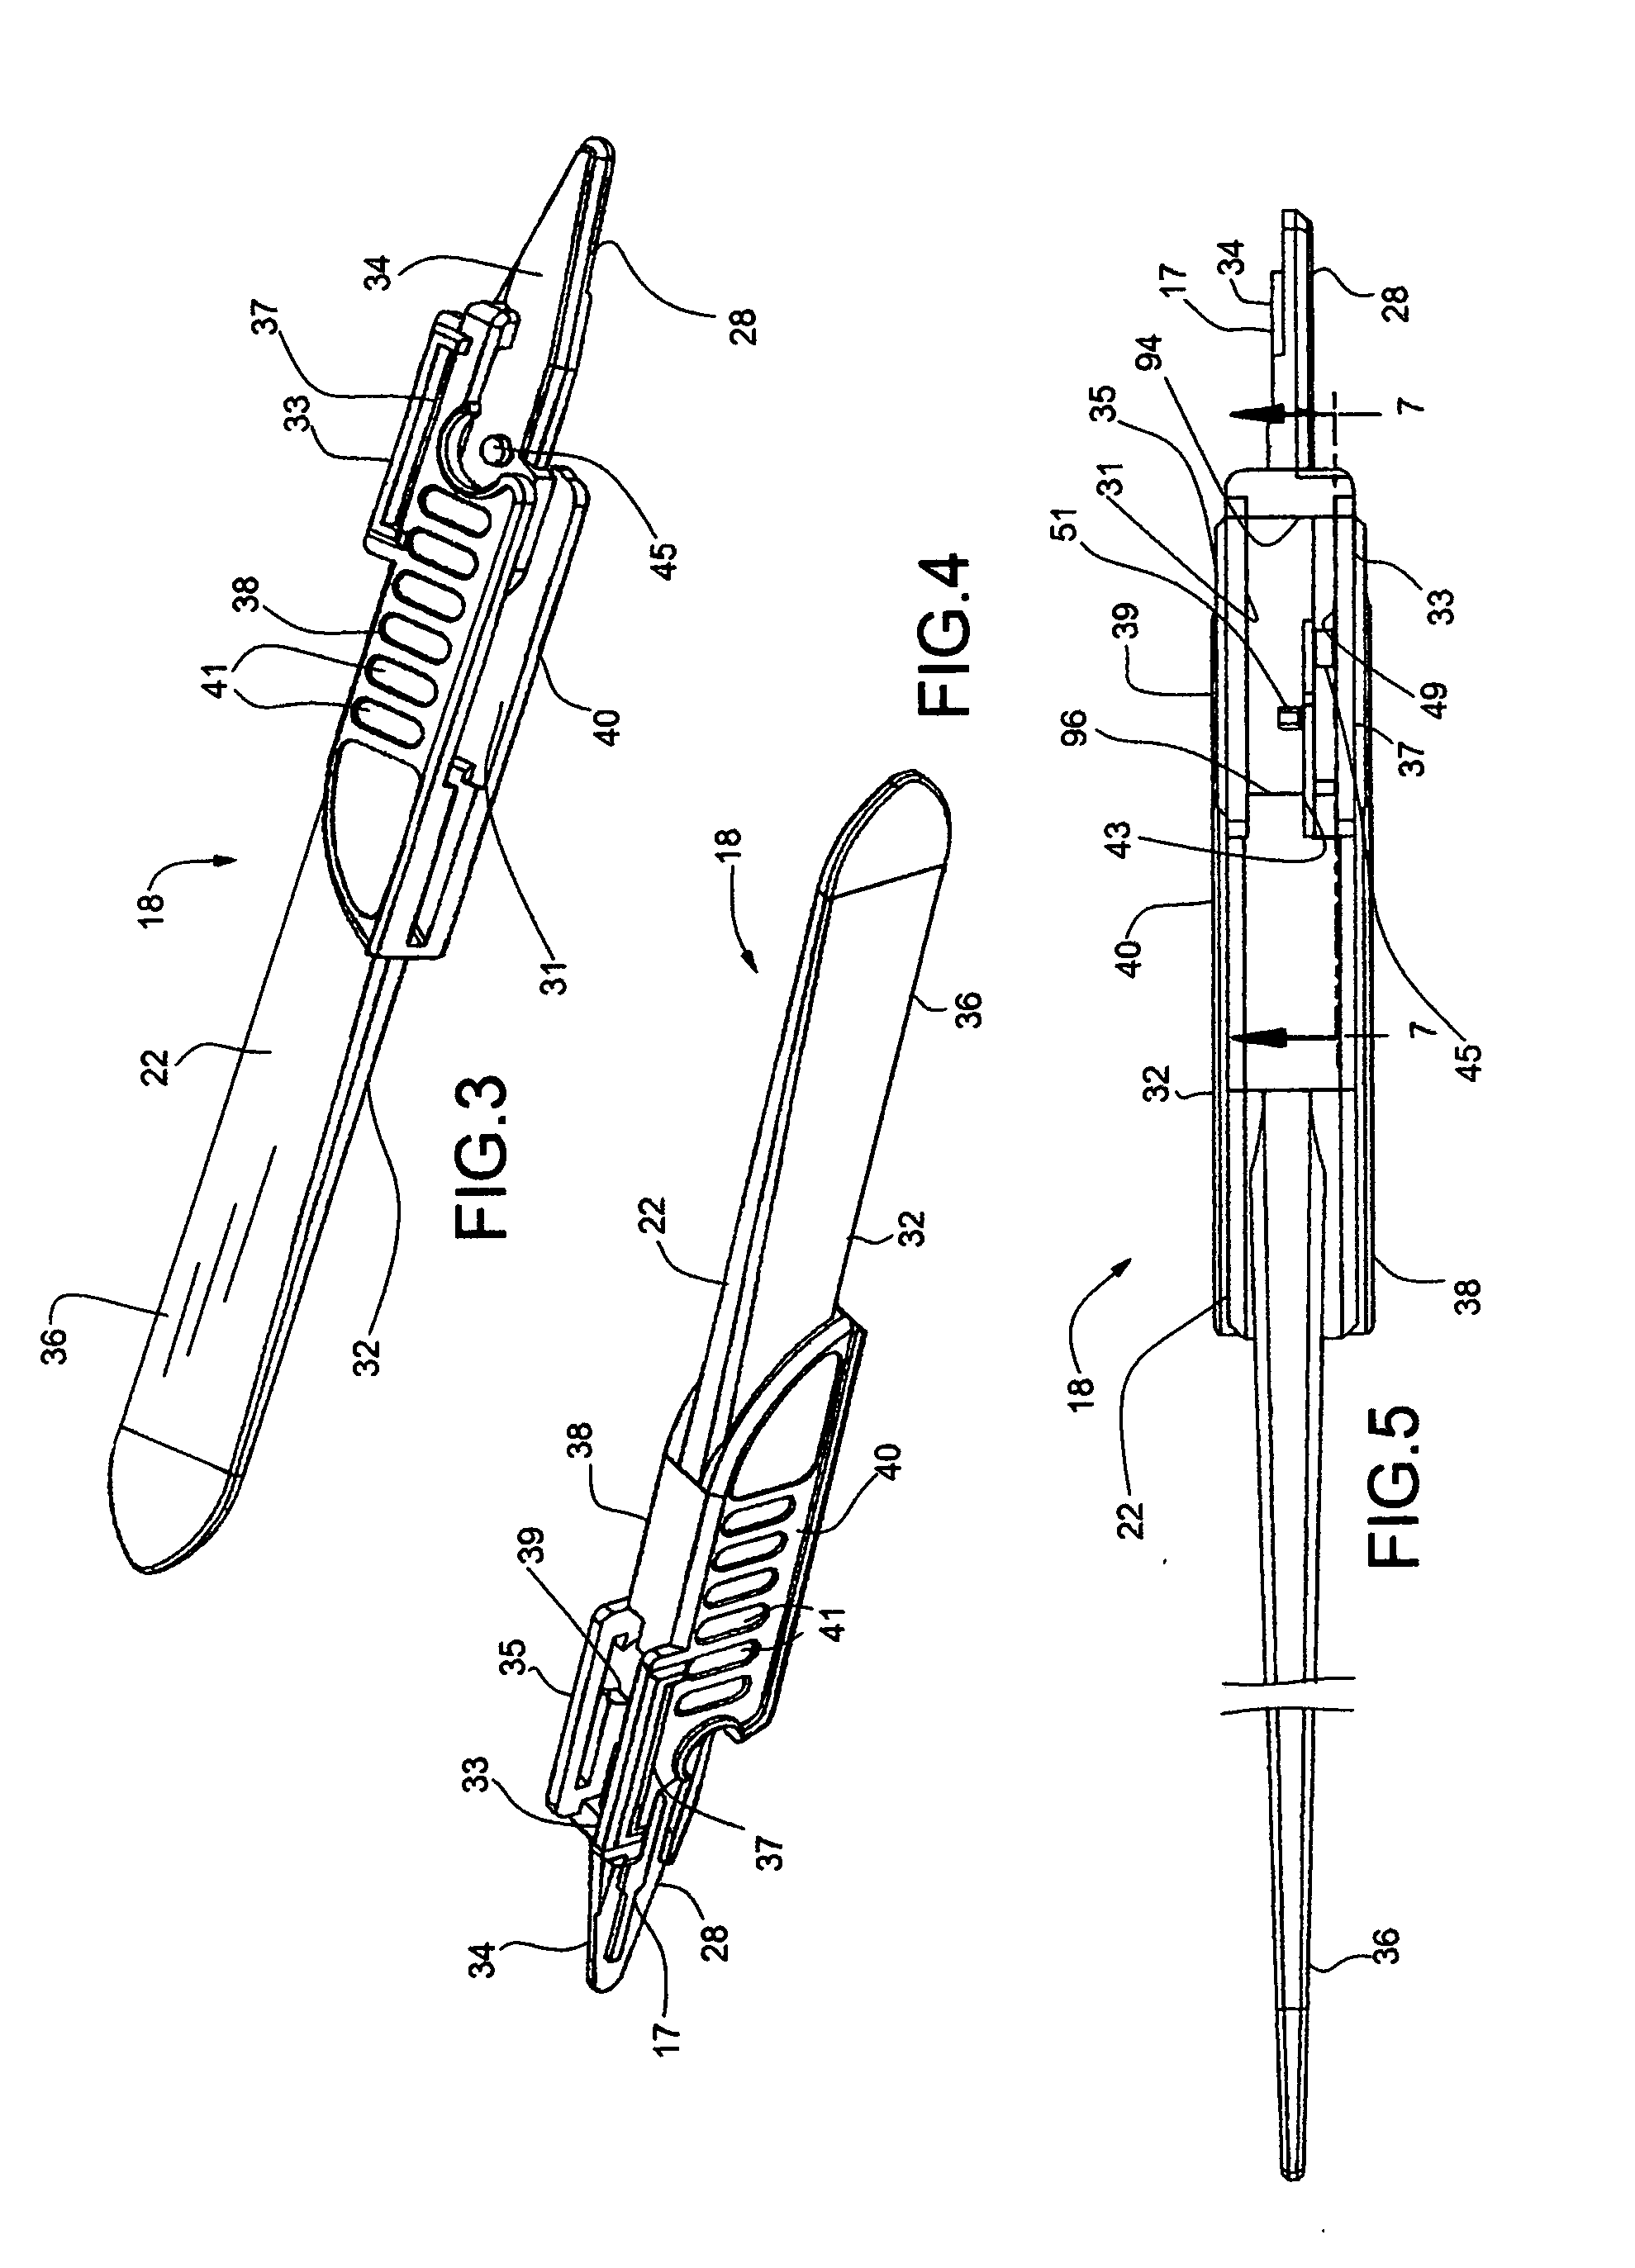 Scalpel handle having a blade shield utilizing over center spring